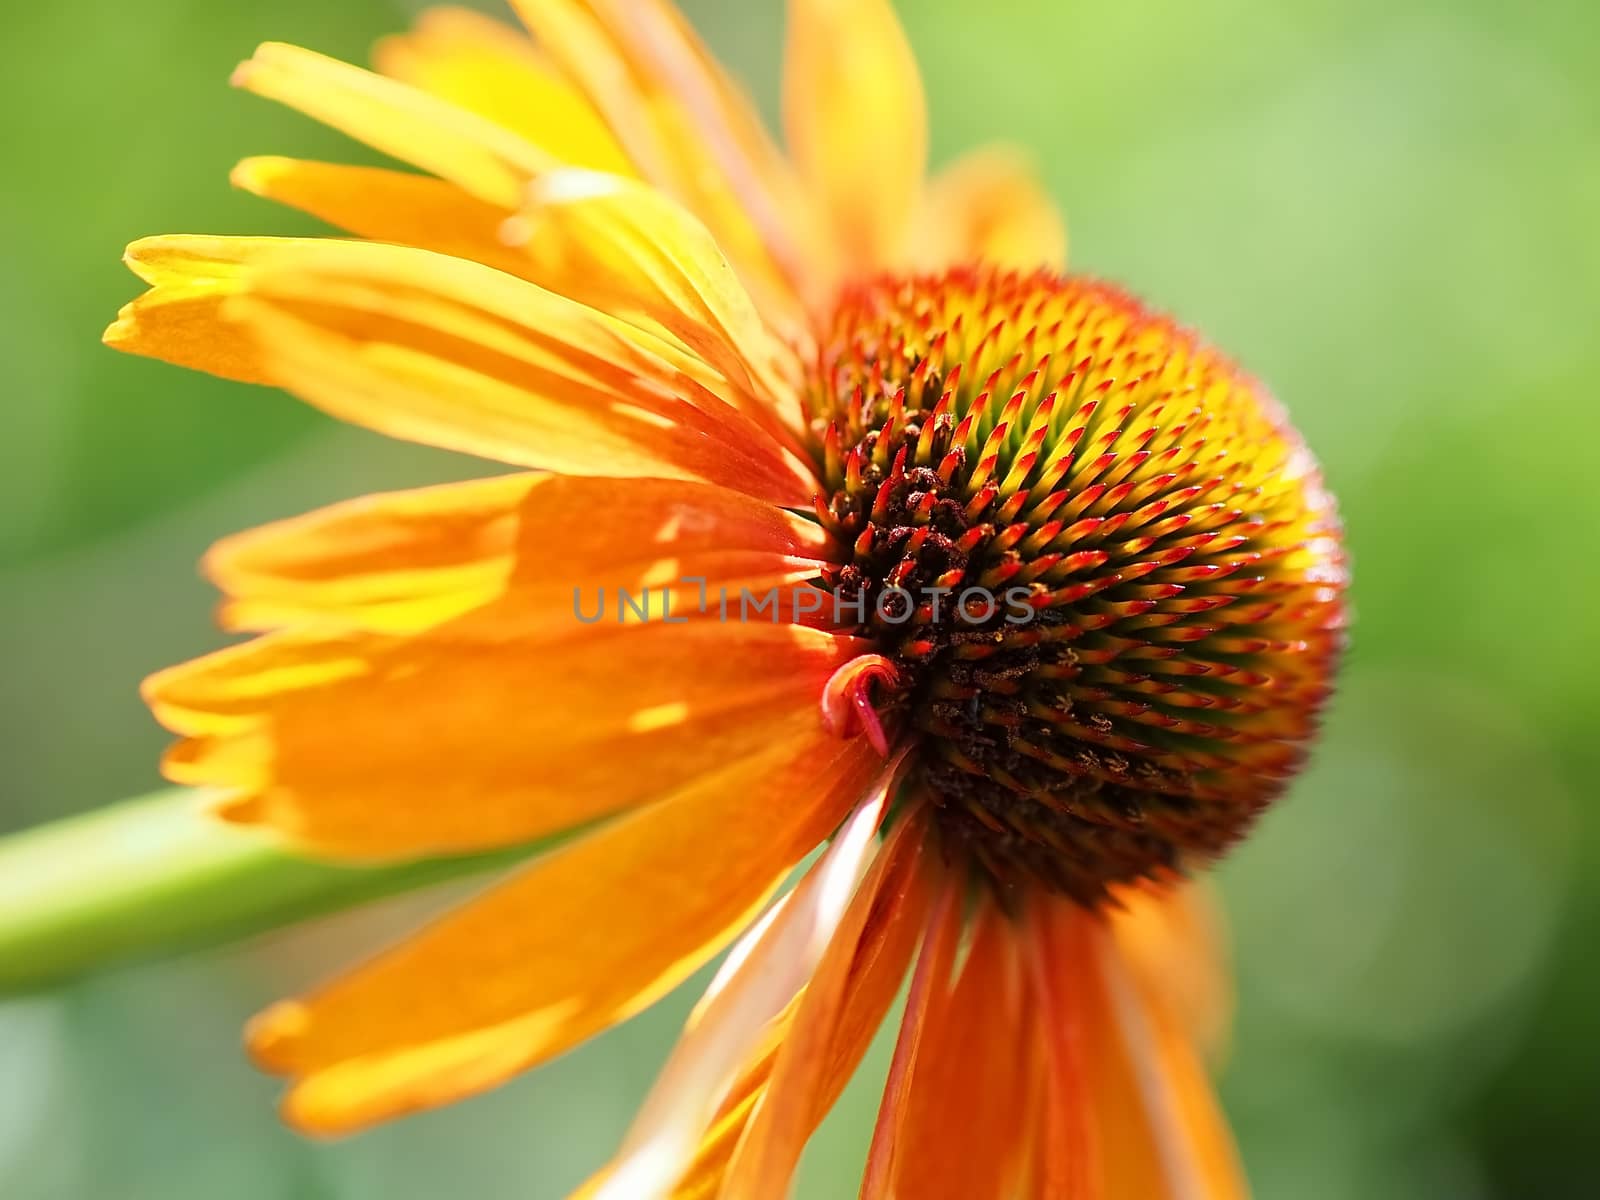 Macro of a yellow echinacea or summer hat flower by Stimmungsbilder